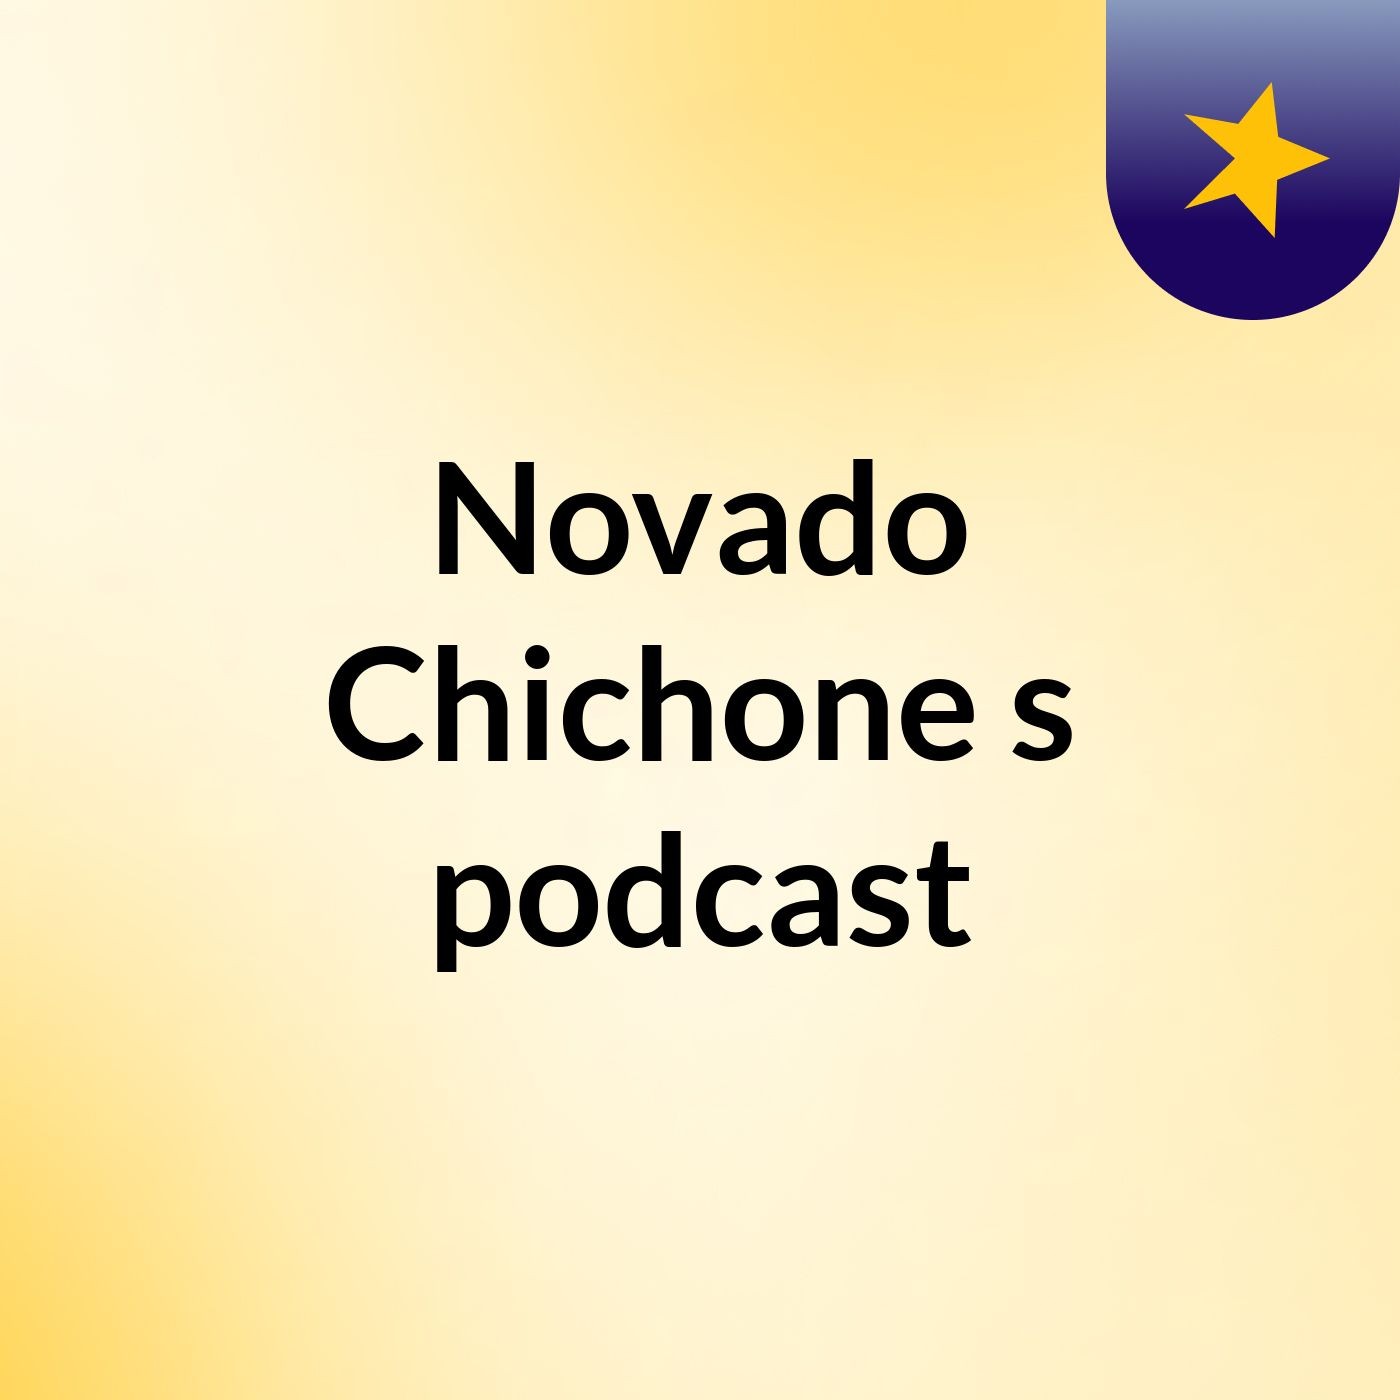 Novado Chichone's podcast